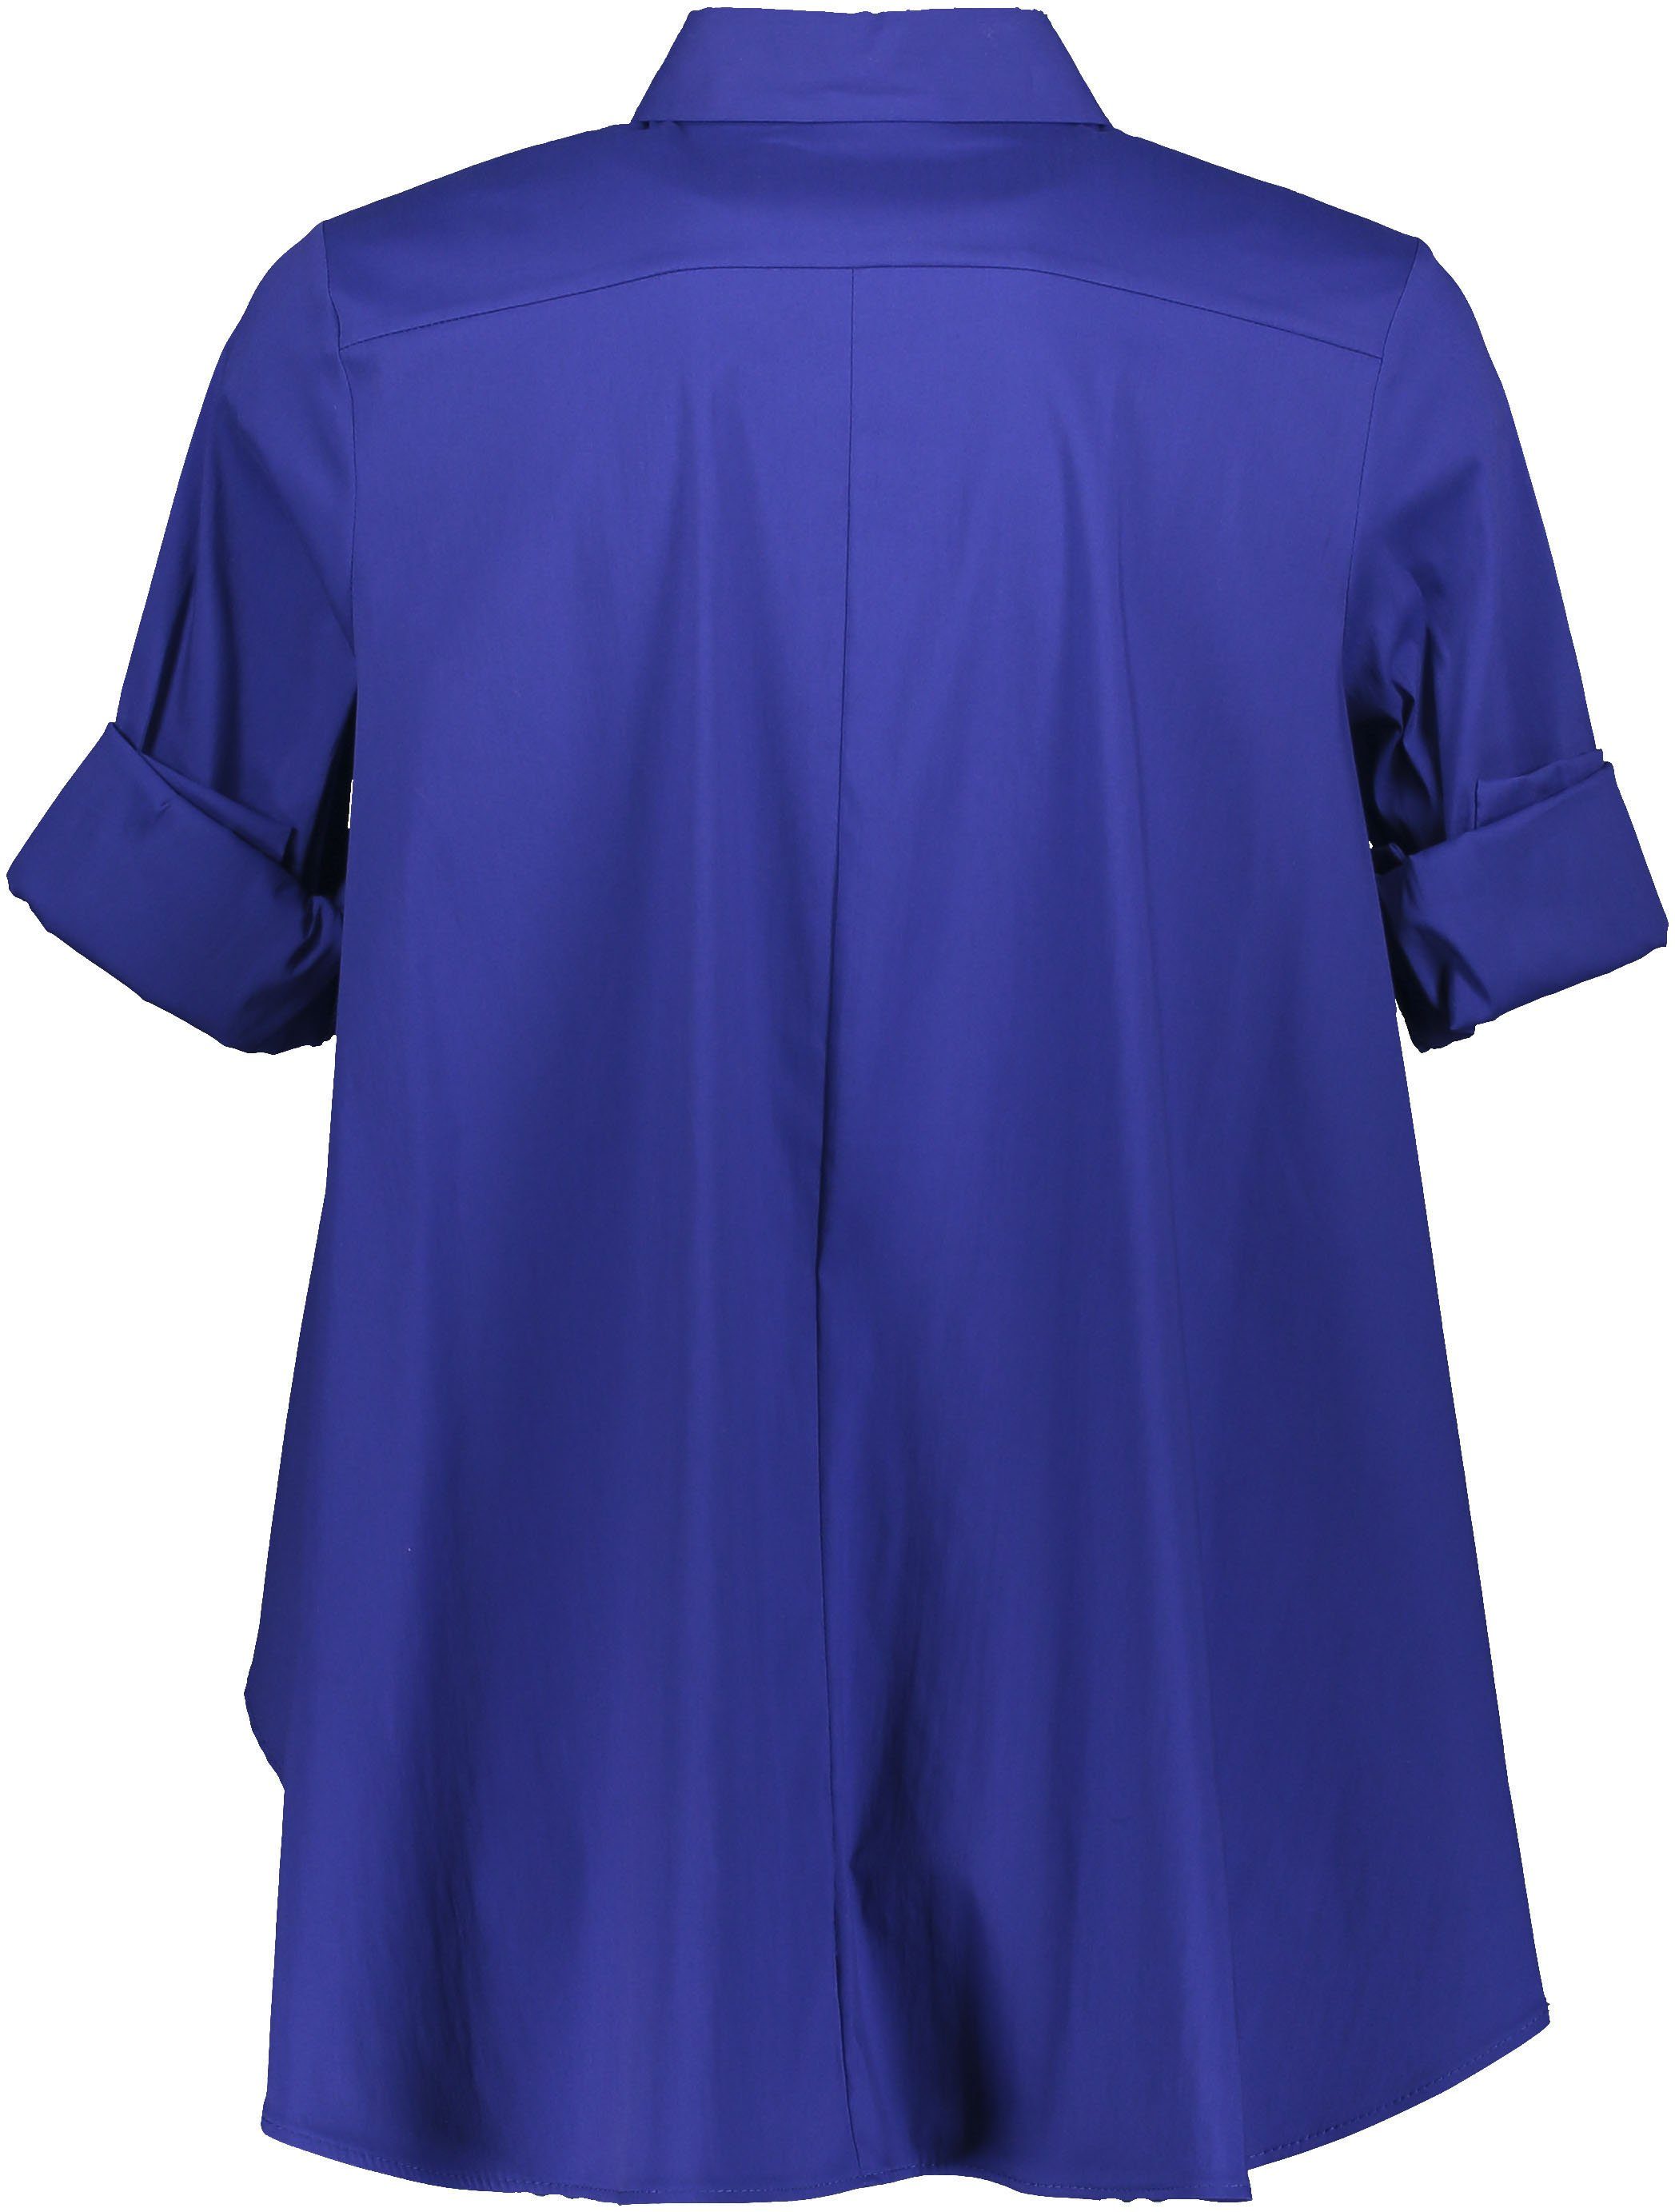 IMPERIAL Klassische Bluse »IMP-CED4DAS45« glockenförmige Form mit Bogensaum